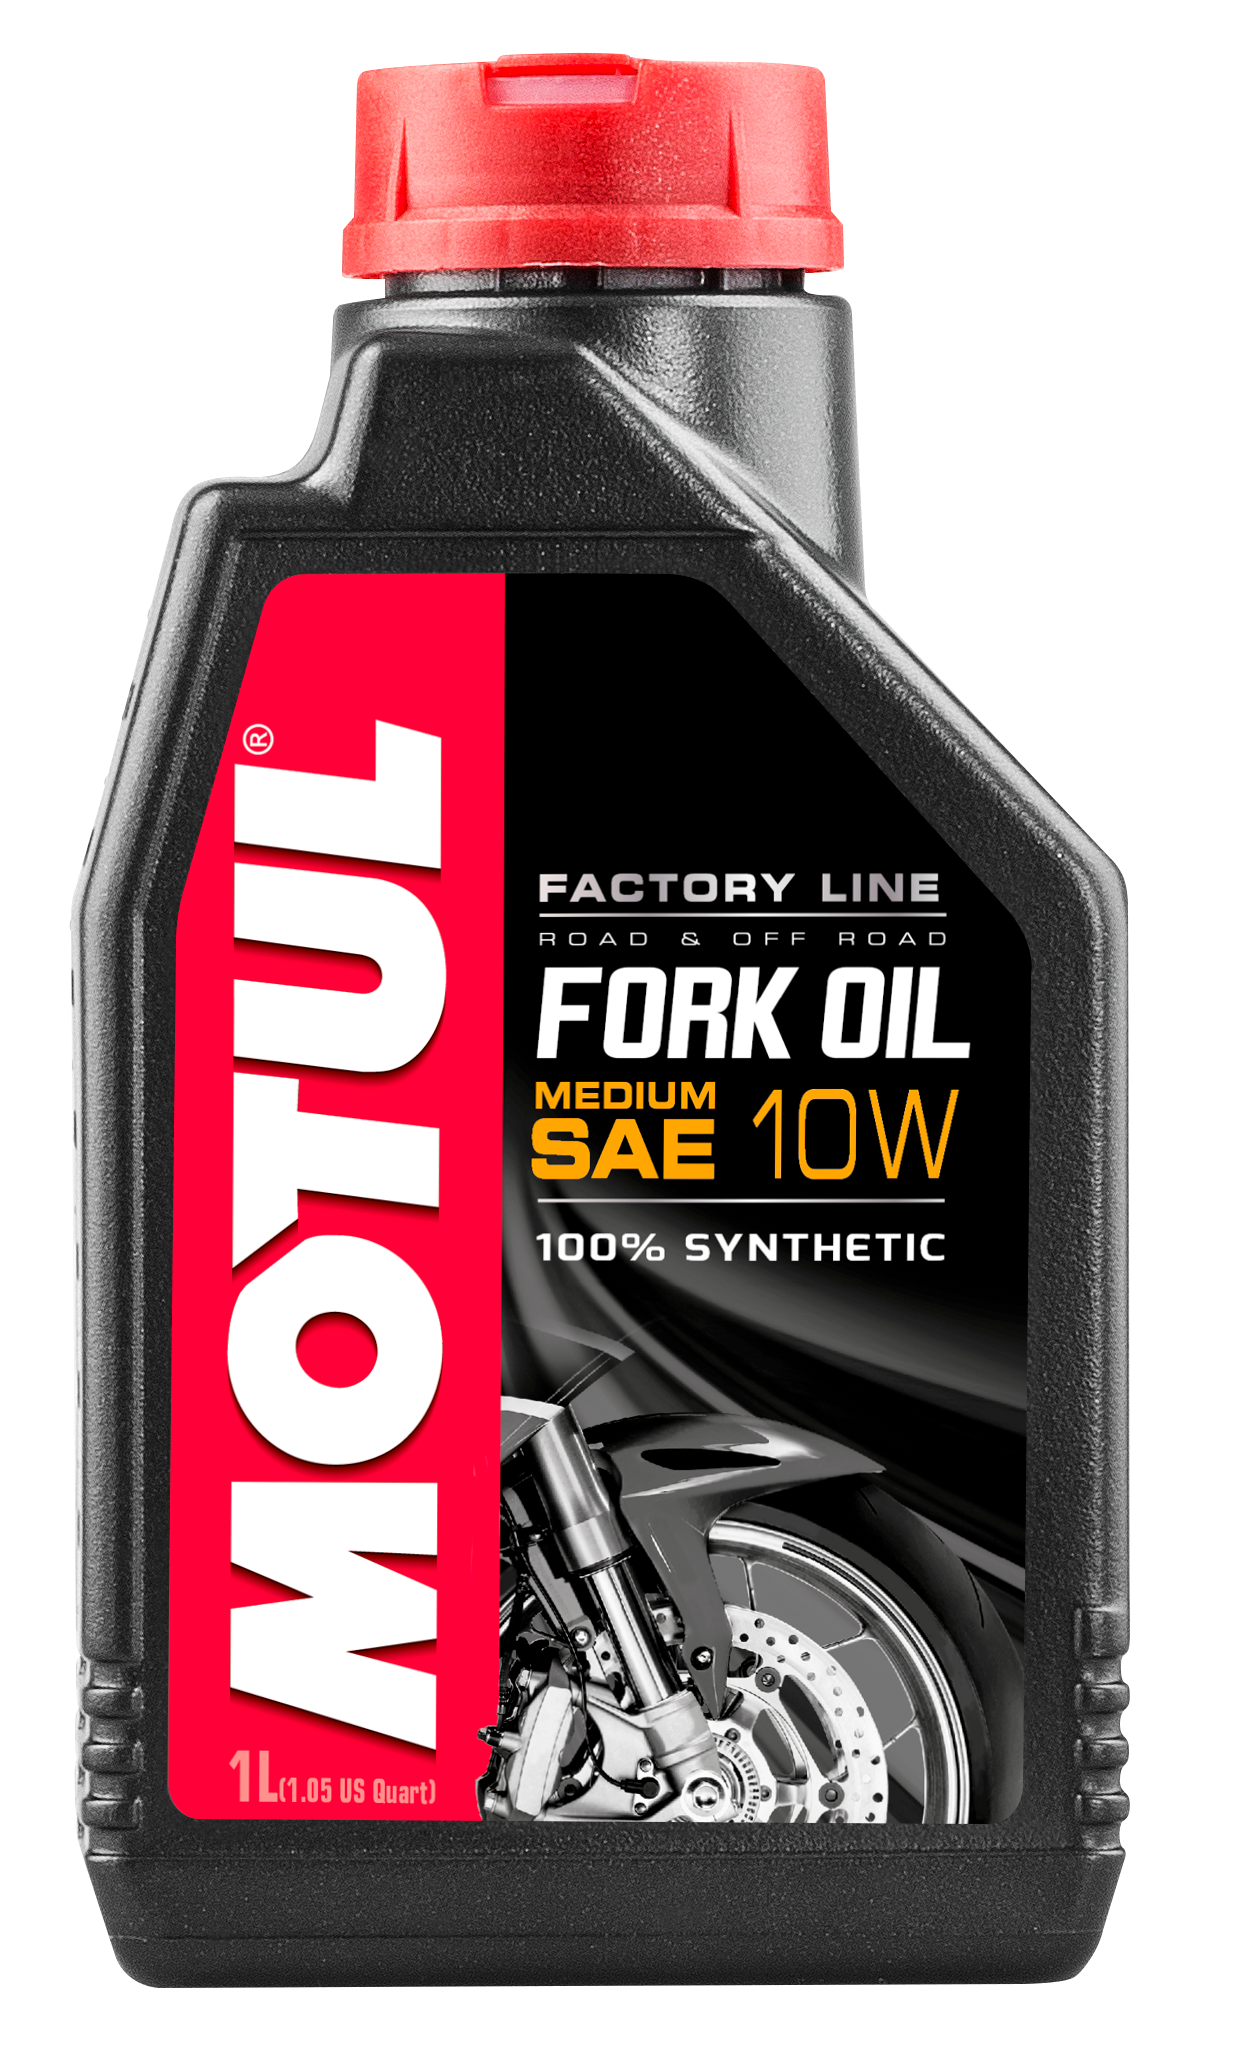 Motul Forkoil Factory Line 10W, 1 liter